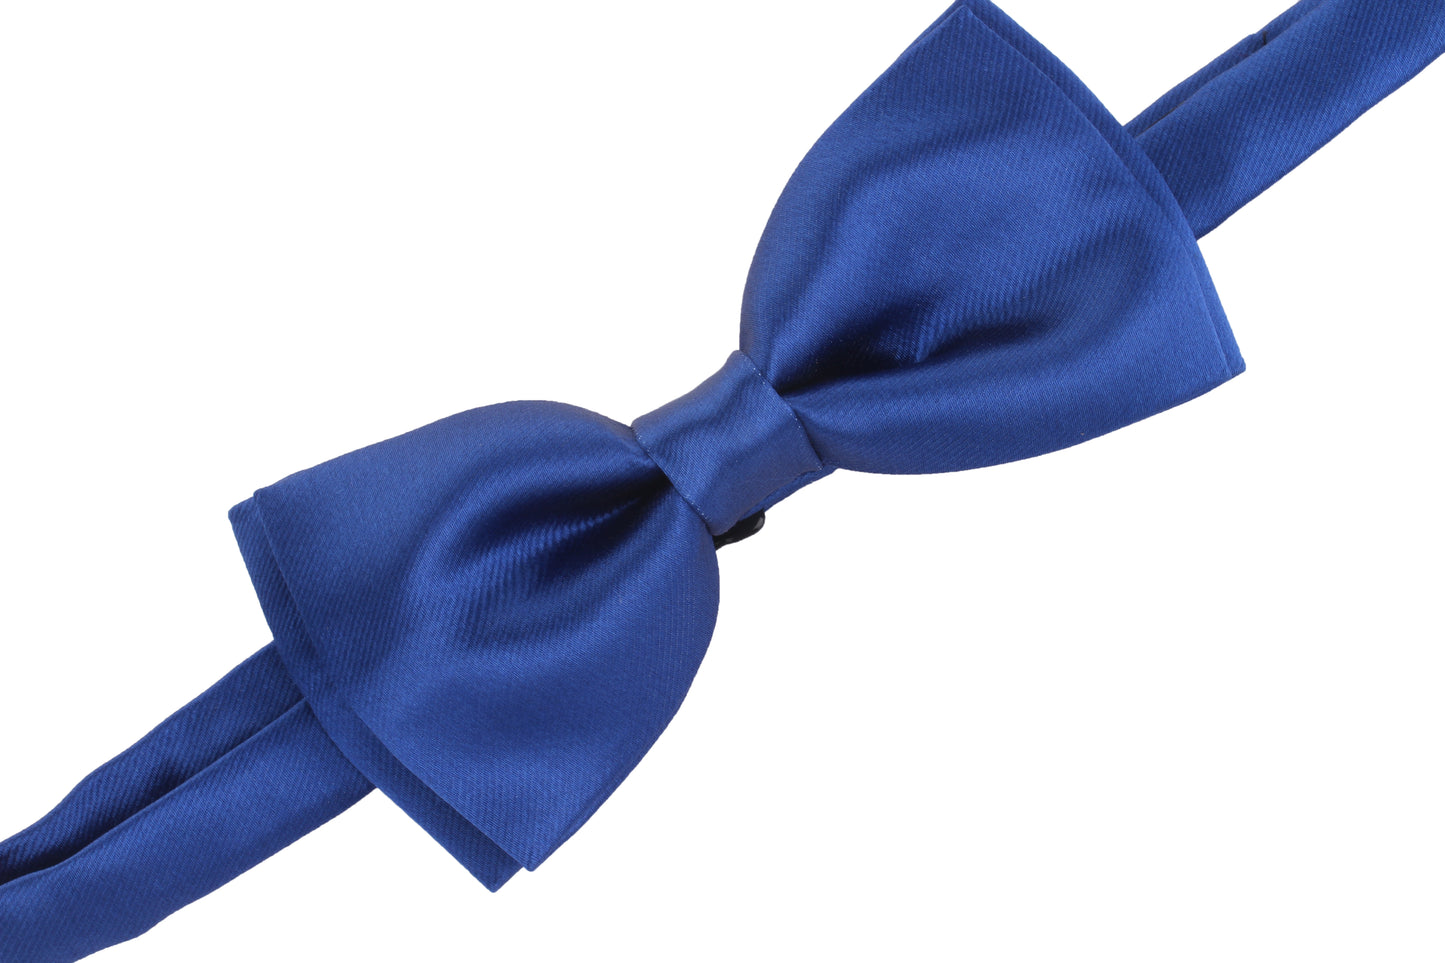 Alvaro Castagnino Men's Royal Blue Colored Microfiber Bow Tie